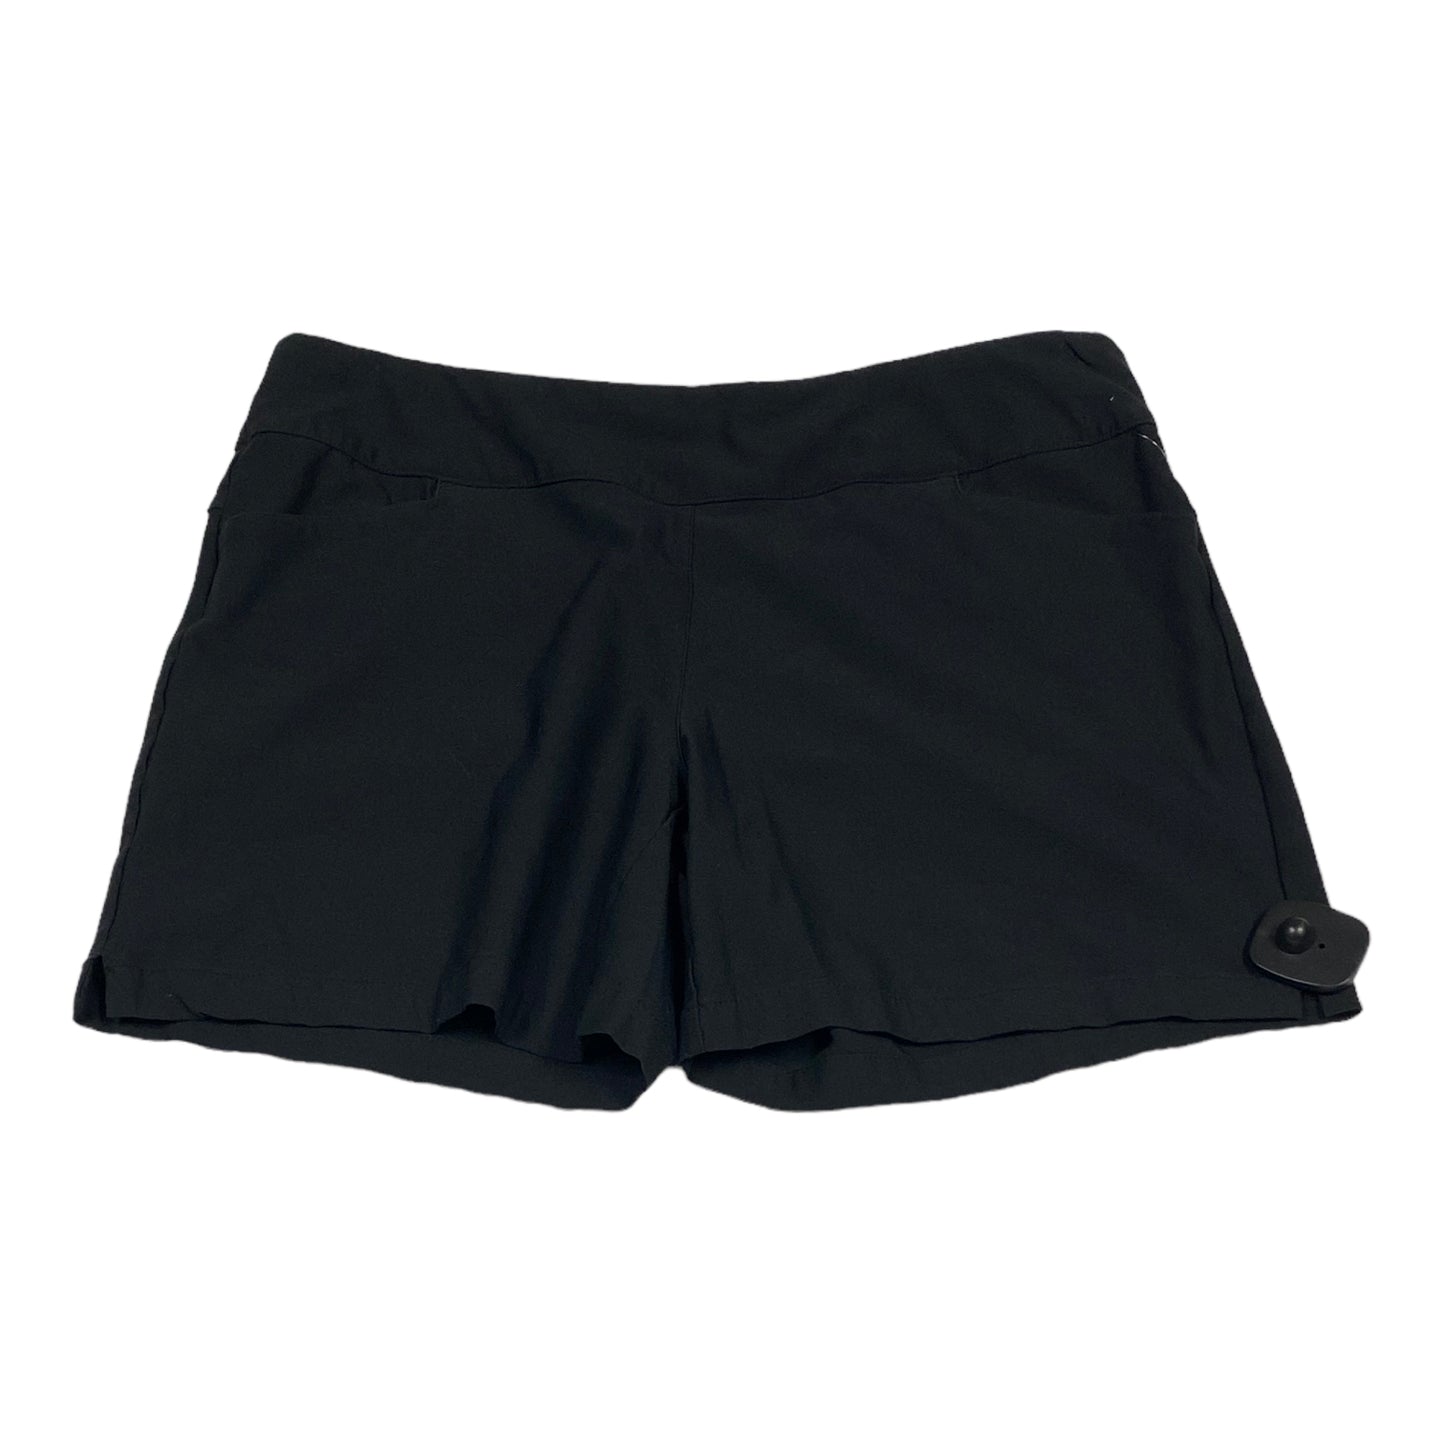 Athletic Shorts By Lady Hagen  Size: Xl